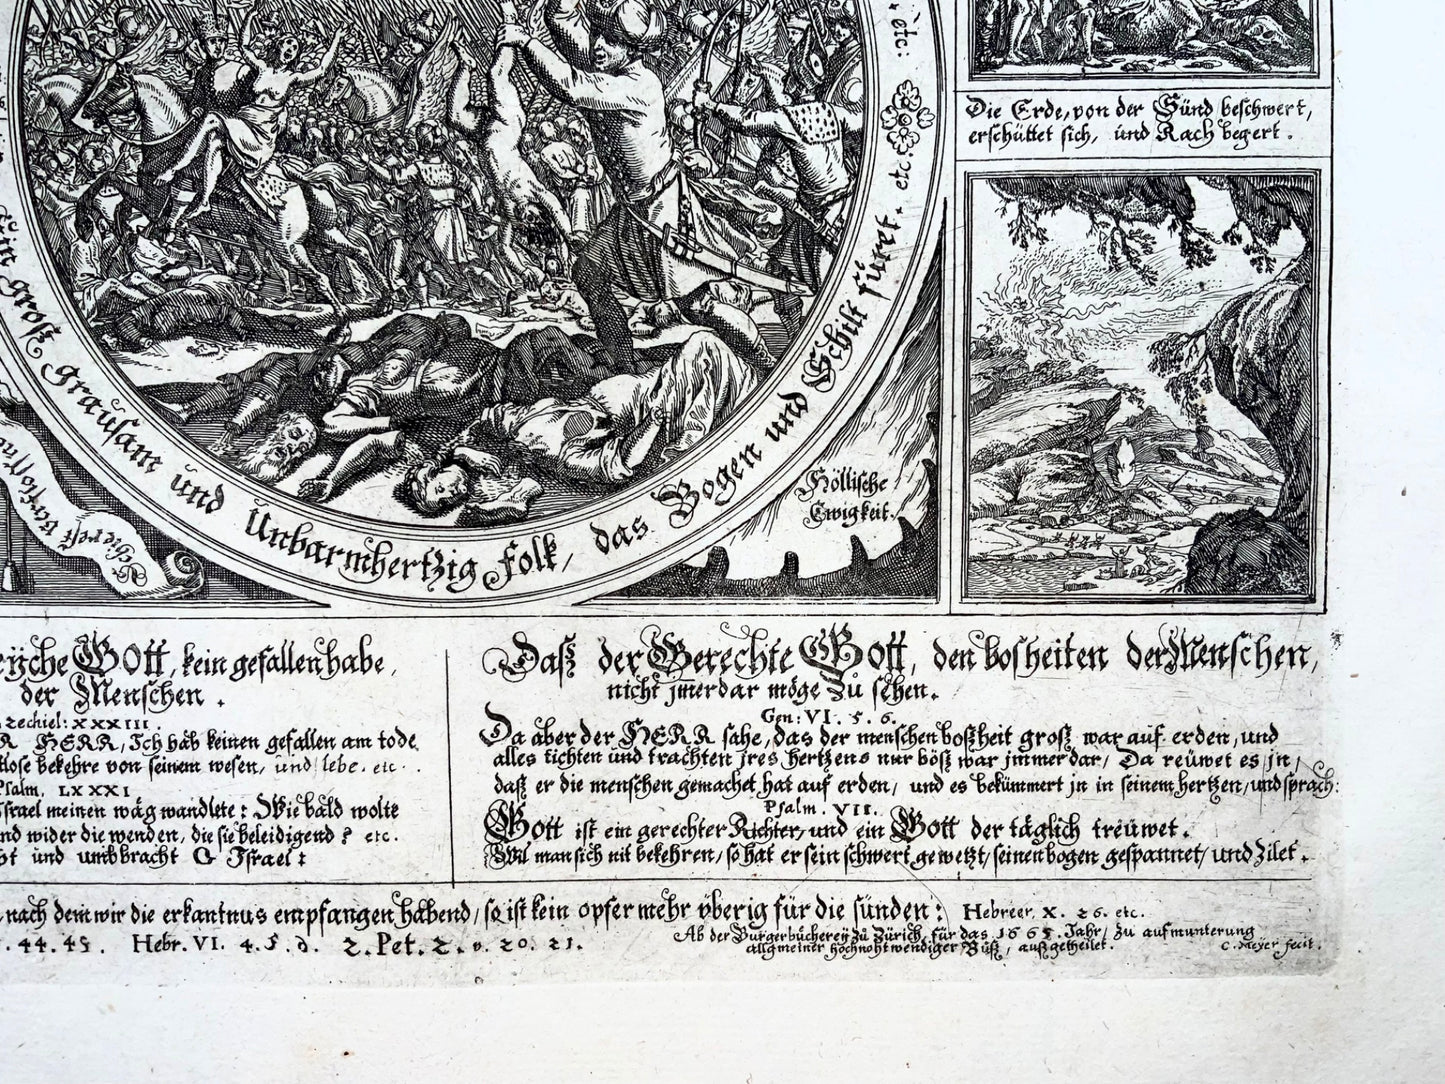 1665 Broadside, Conrad Meyer, “Türkischer Jamerspiegel” Guerre turco-ottomane